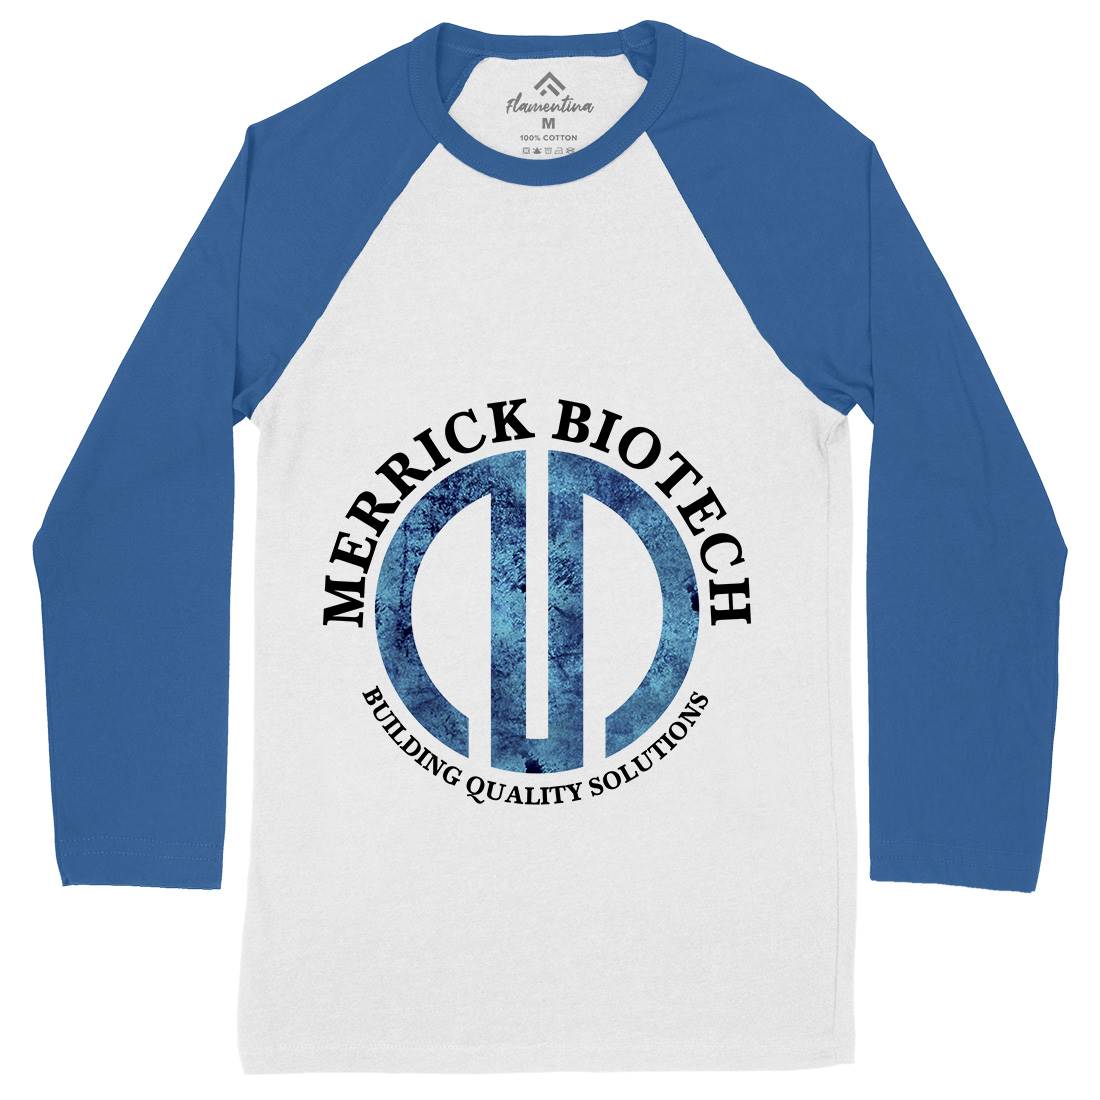 Merrick Biotech Mens Long Sleeve Baseball T-Shirt Space D393